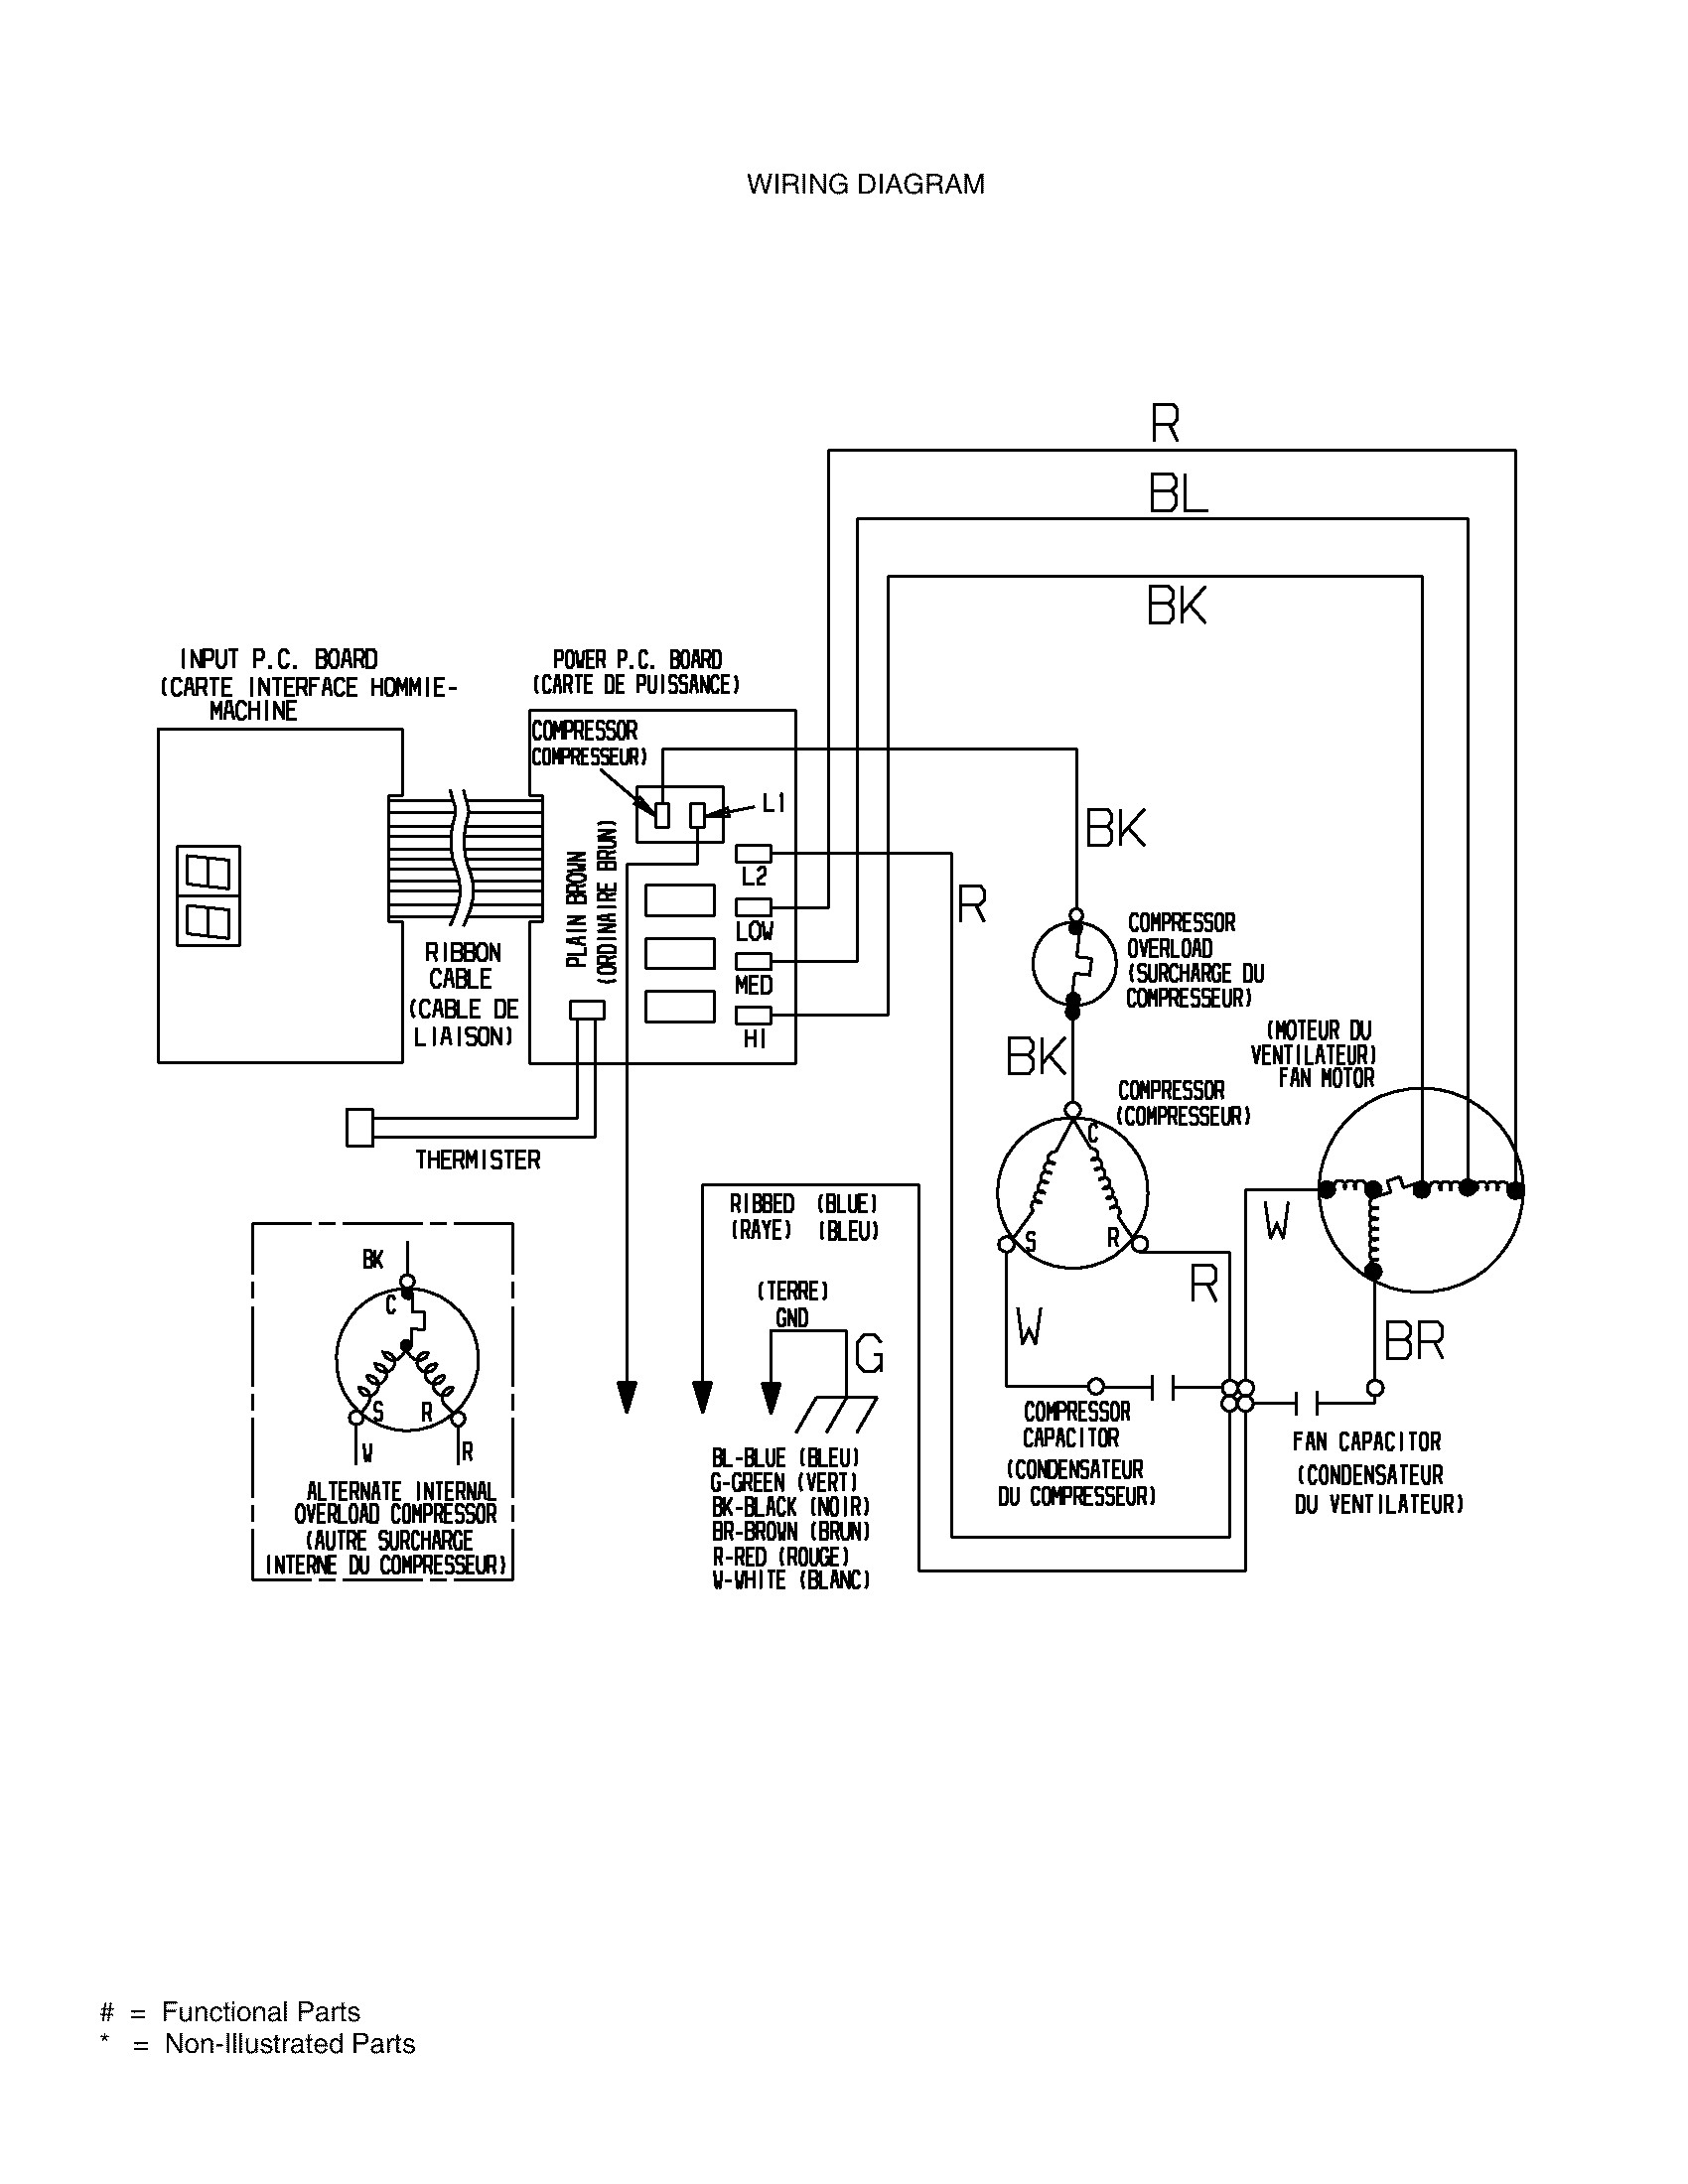 Trane Air Conditioner Wiring Diagram Coleman Rv Air Conditioner Wiring Diagram – Wire Diagram Of Trane Air Conditioner Wiring Diagram